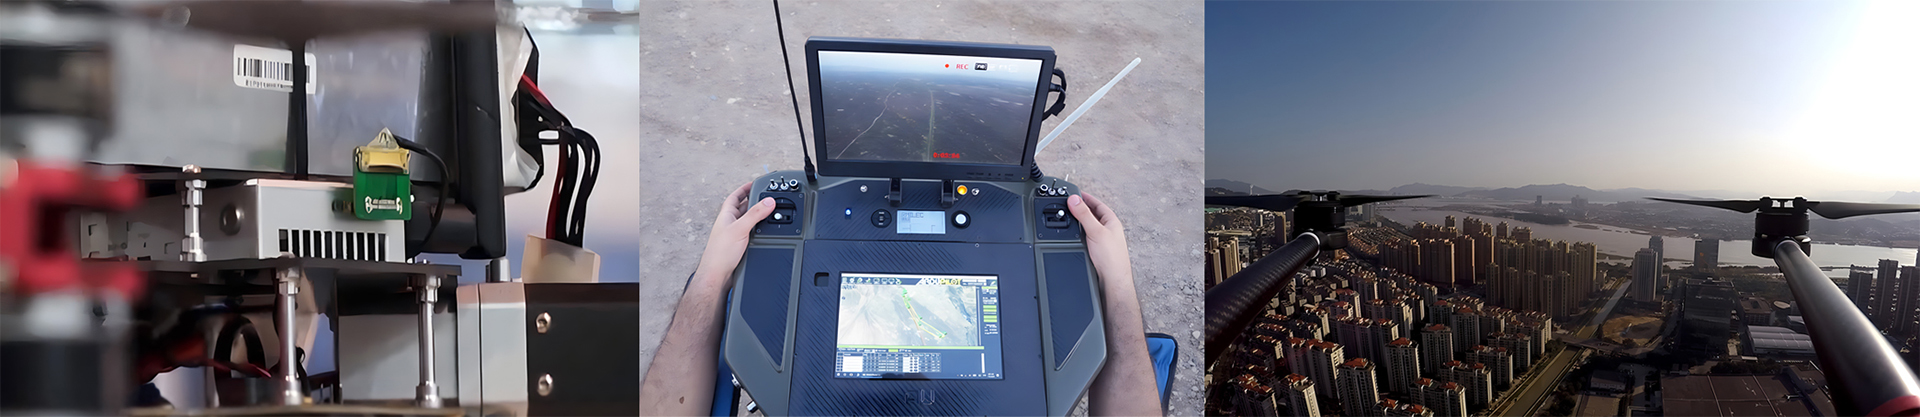 FIP2410-10km-UAV-Escenarios-de-aplicación-emisor-de-vídeo-dixital